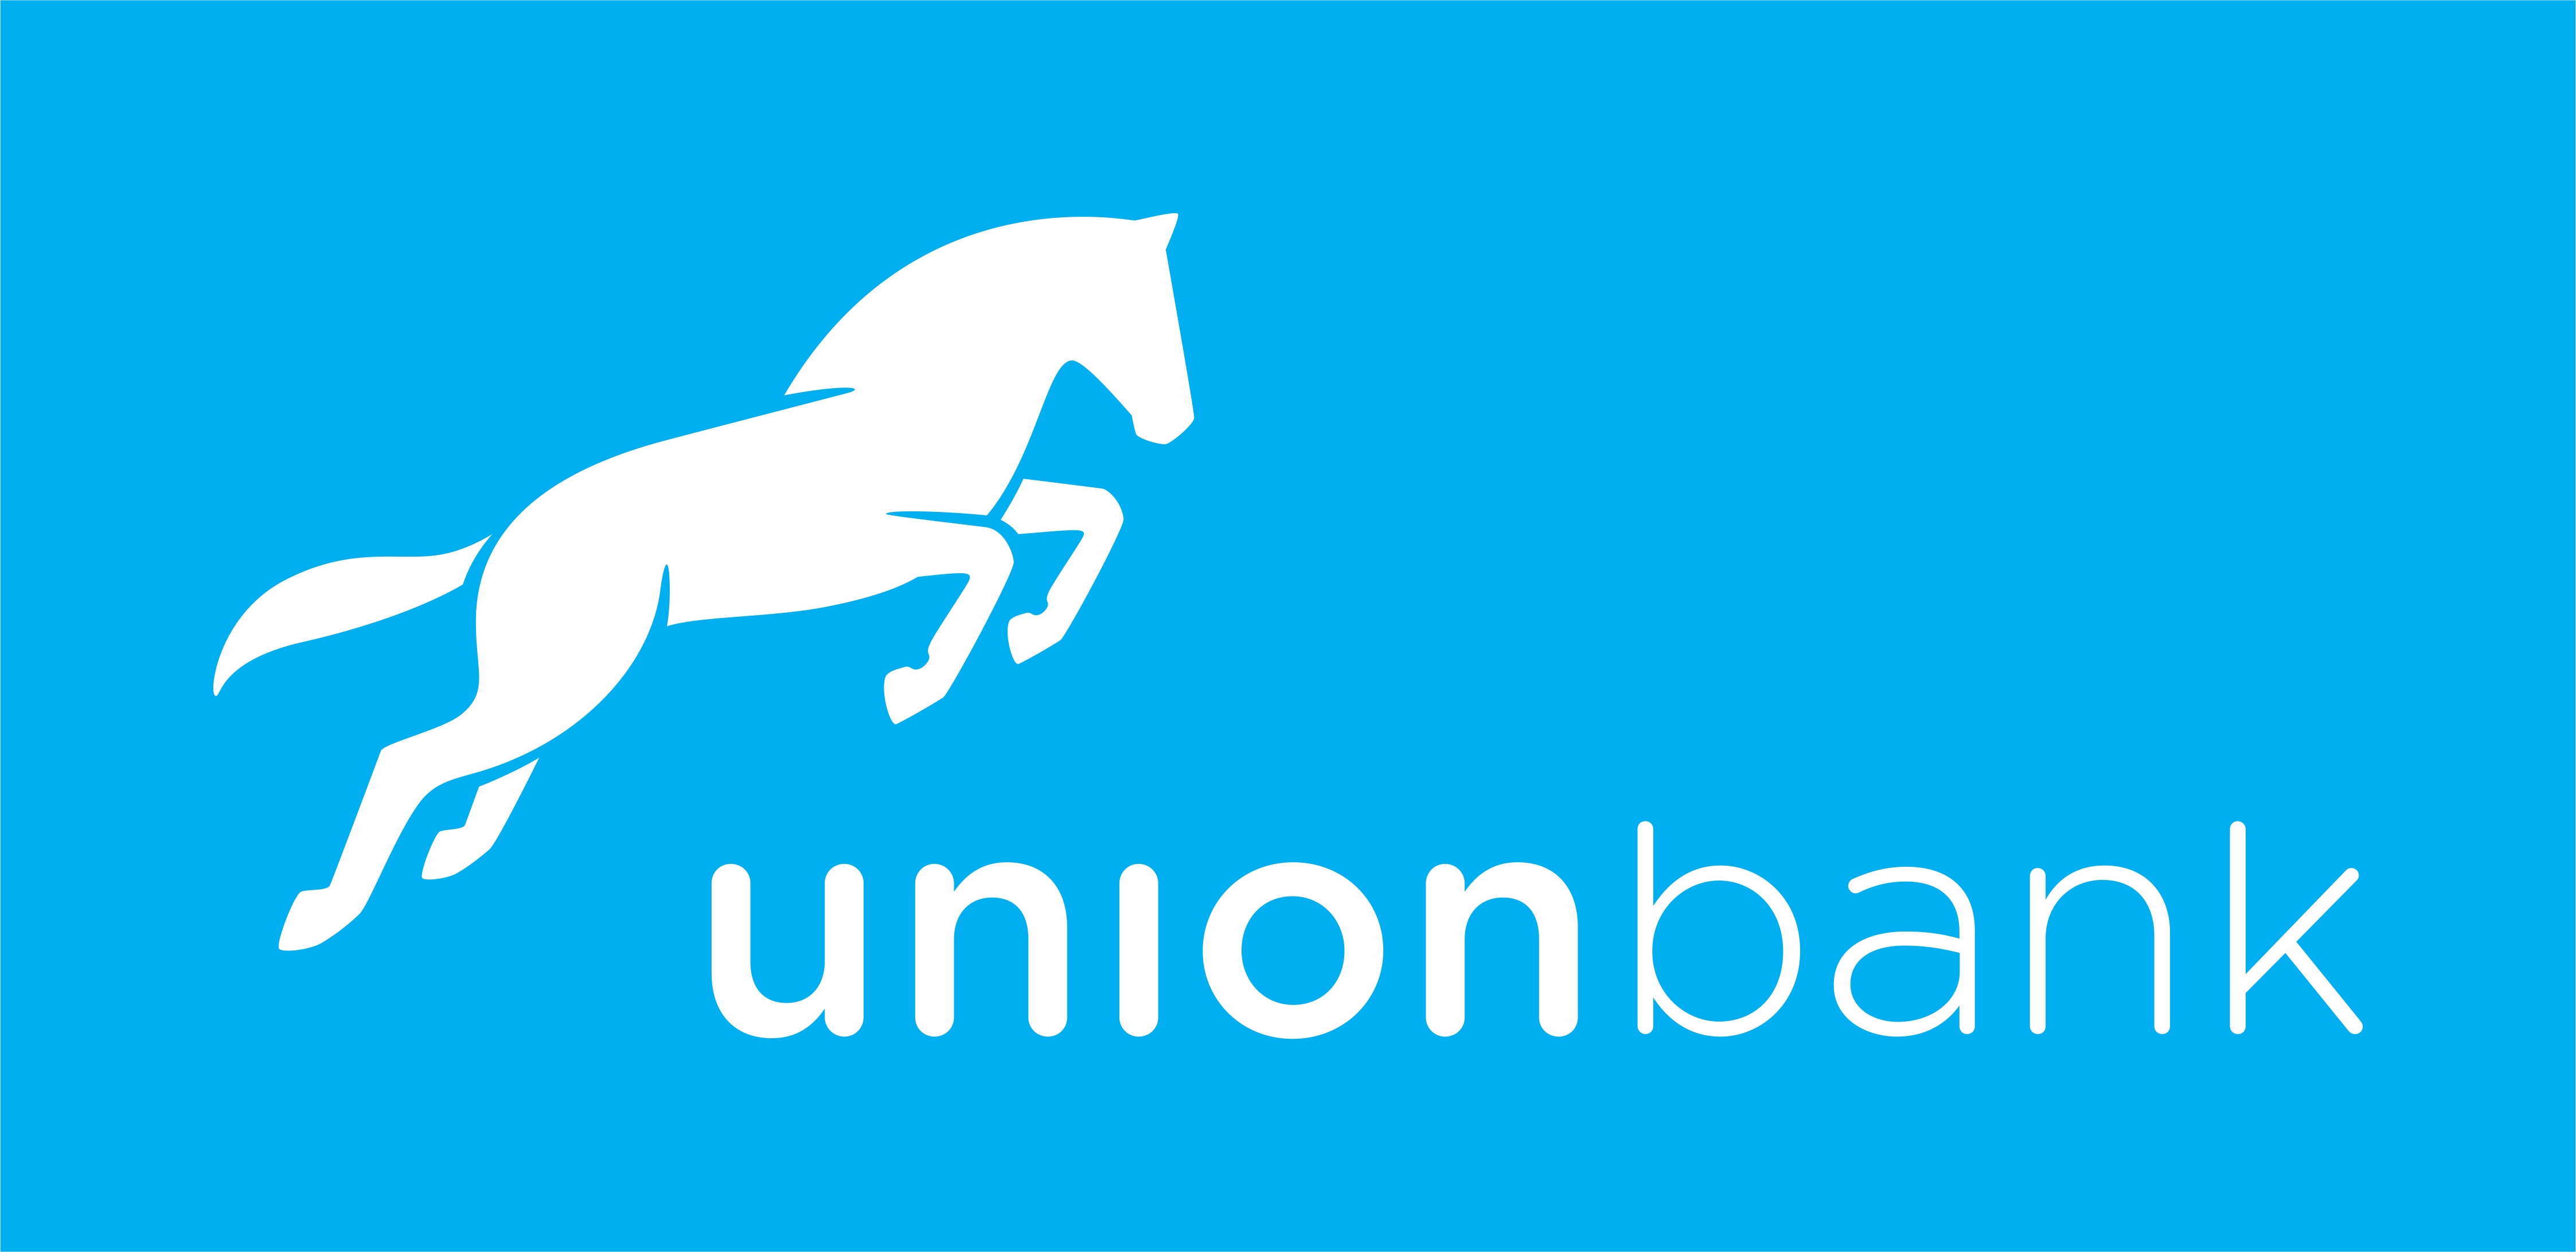 Union Bank unveils new brand identity